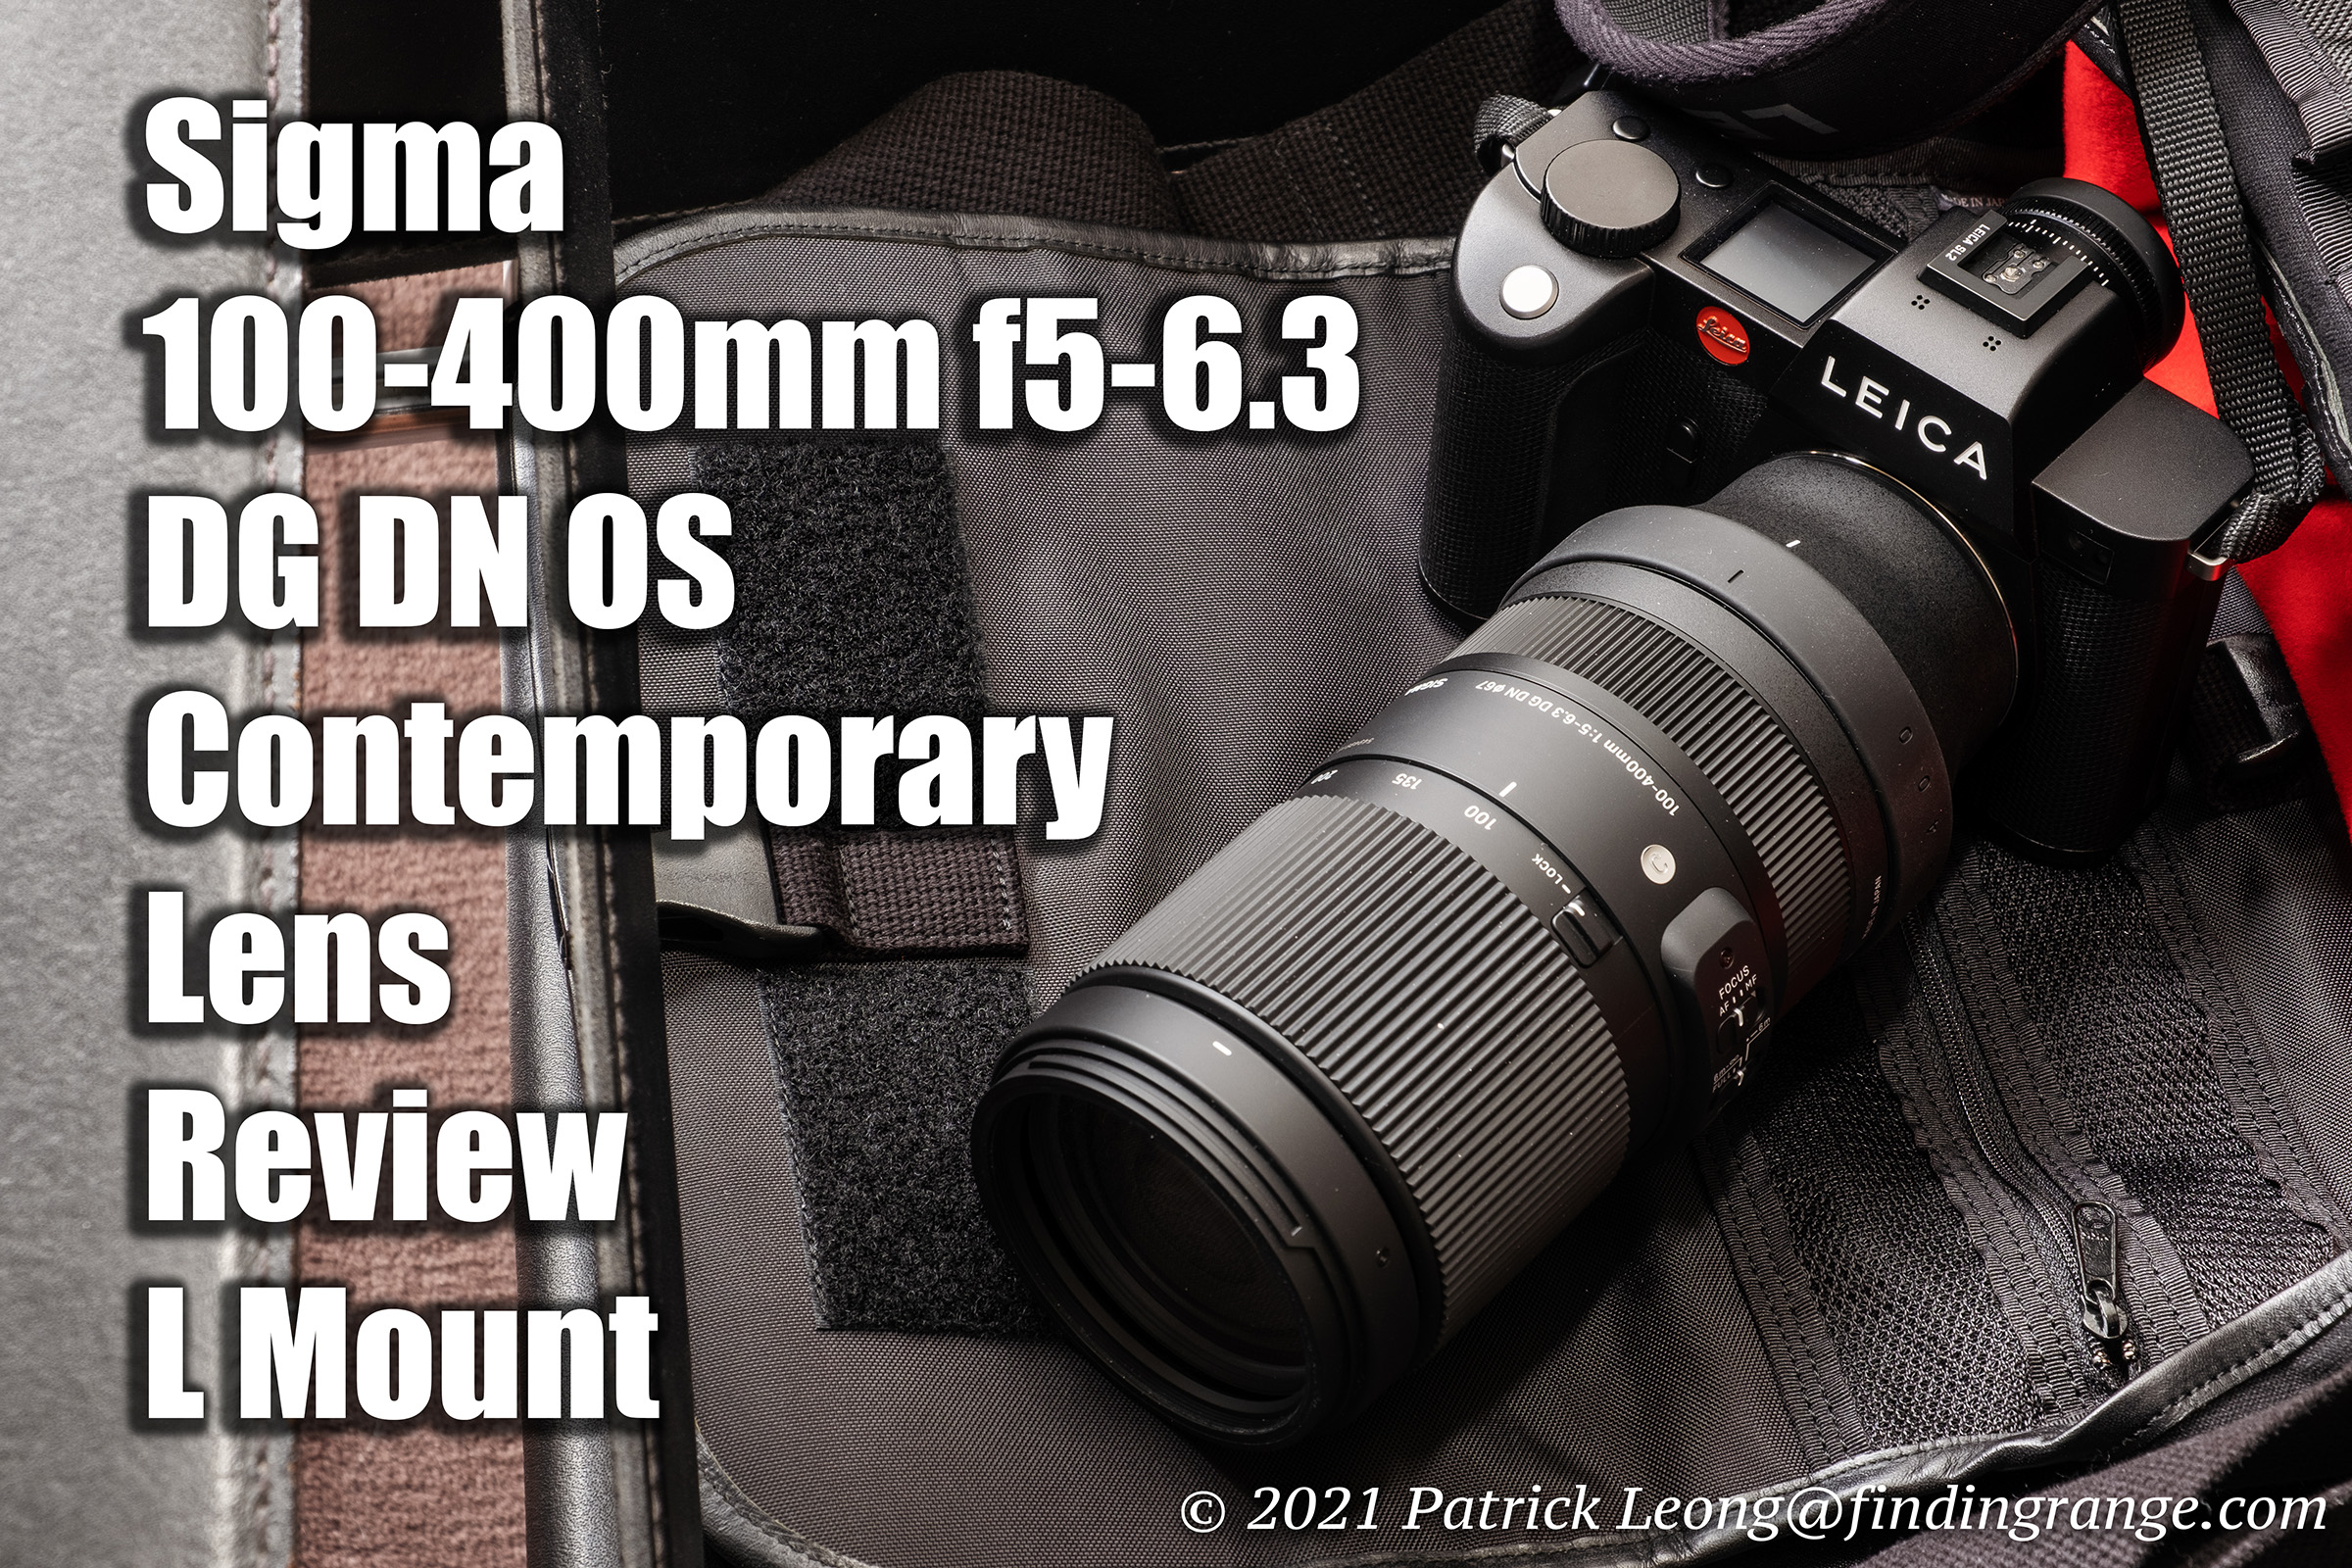 Sigma 100-400mm f5-6.3 DG DN OS Contemporary Lens Review L 